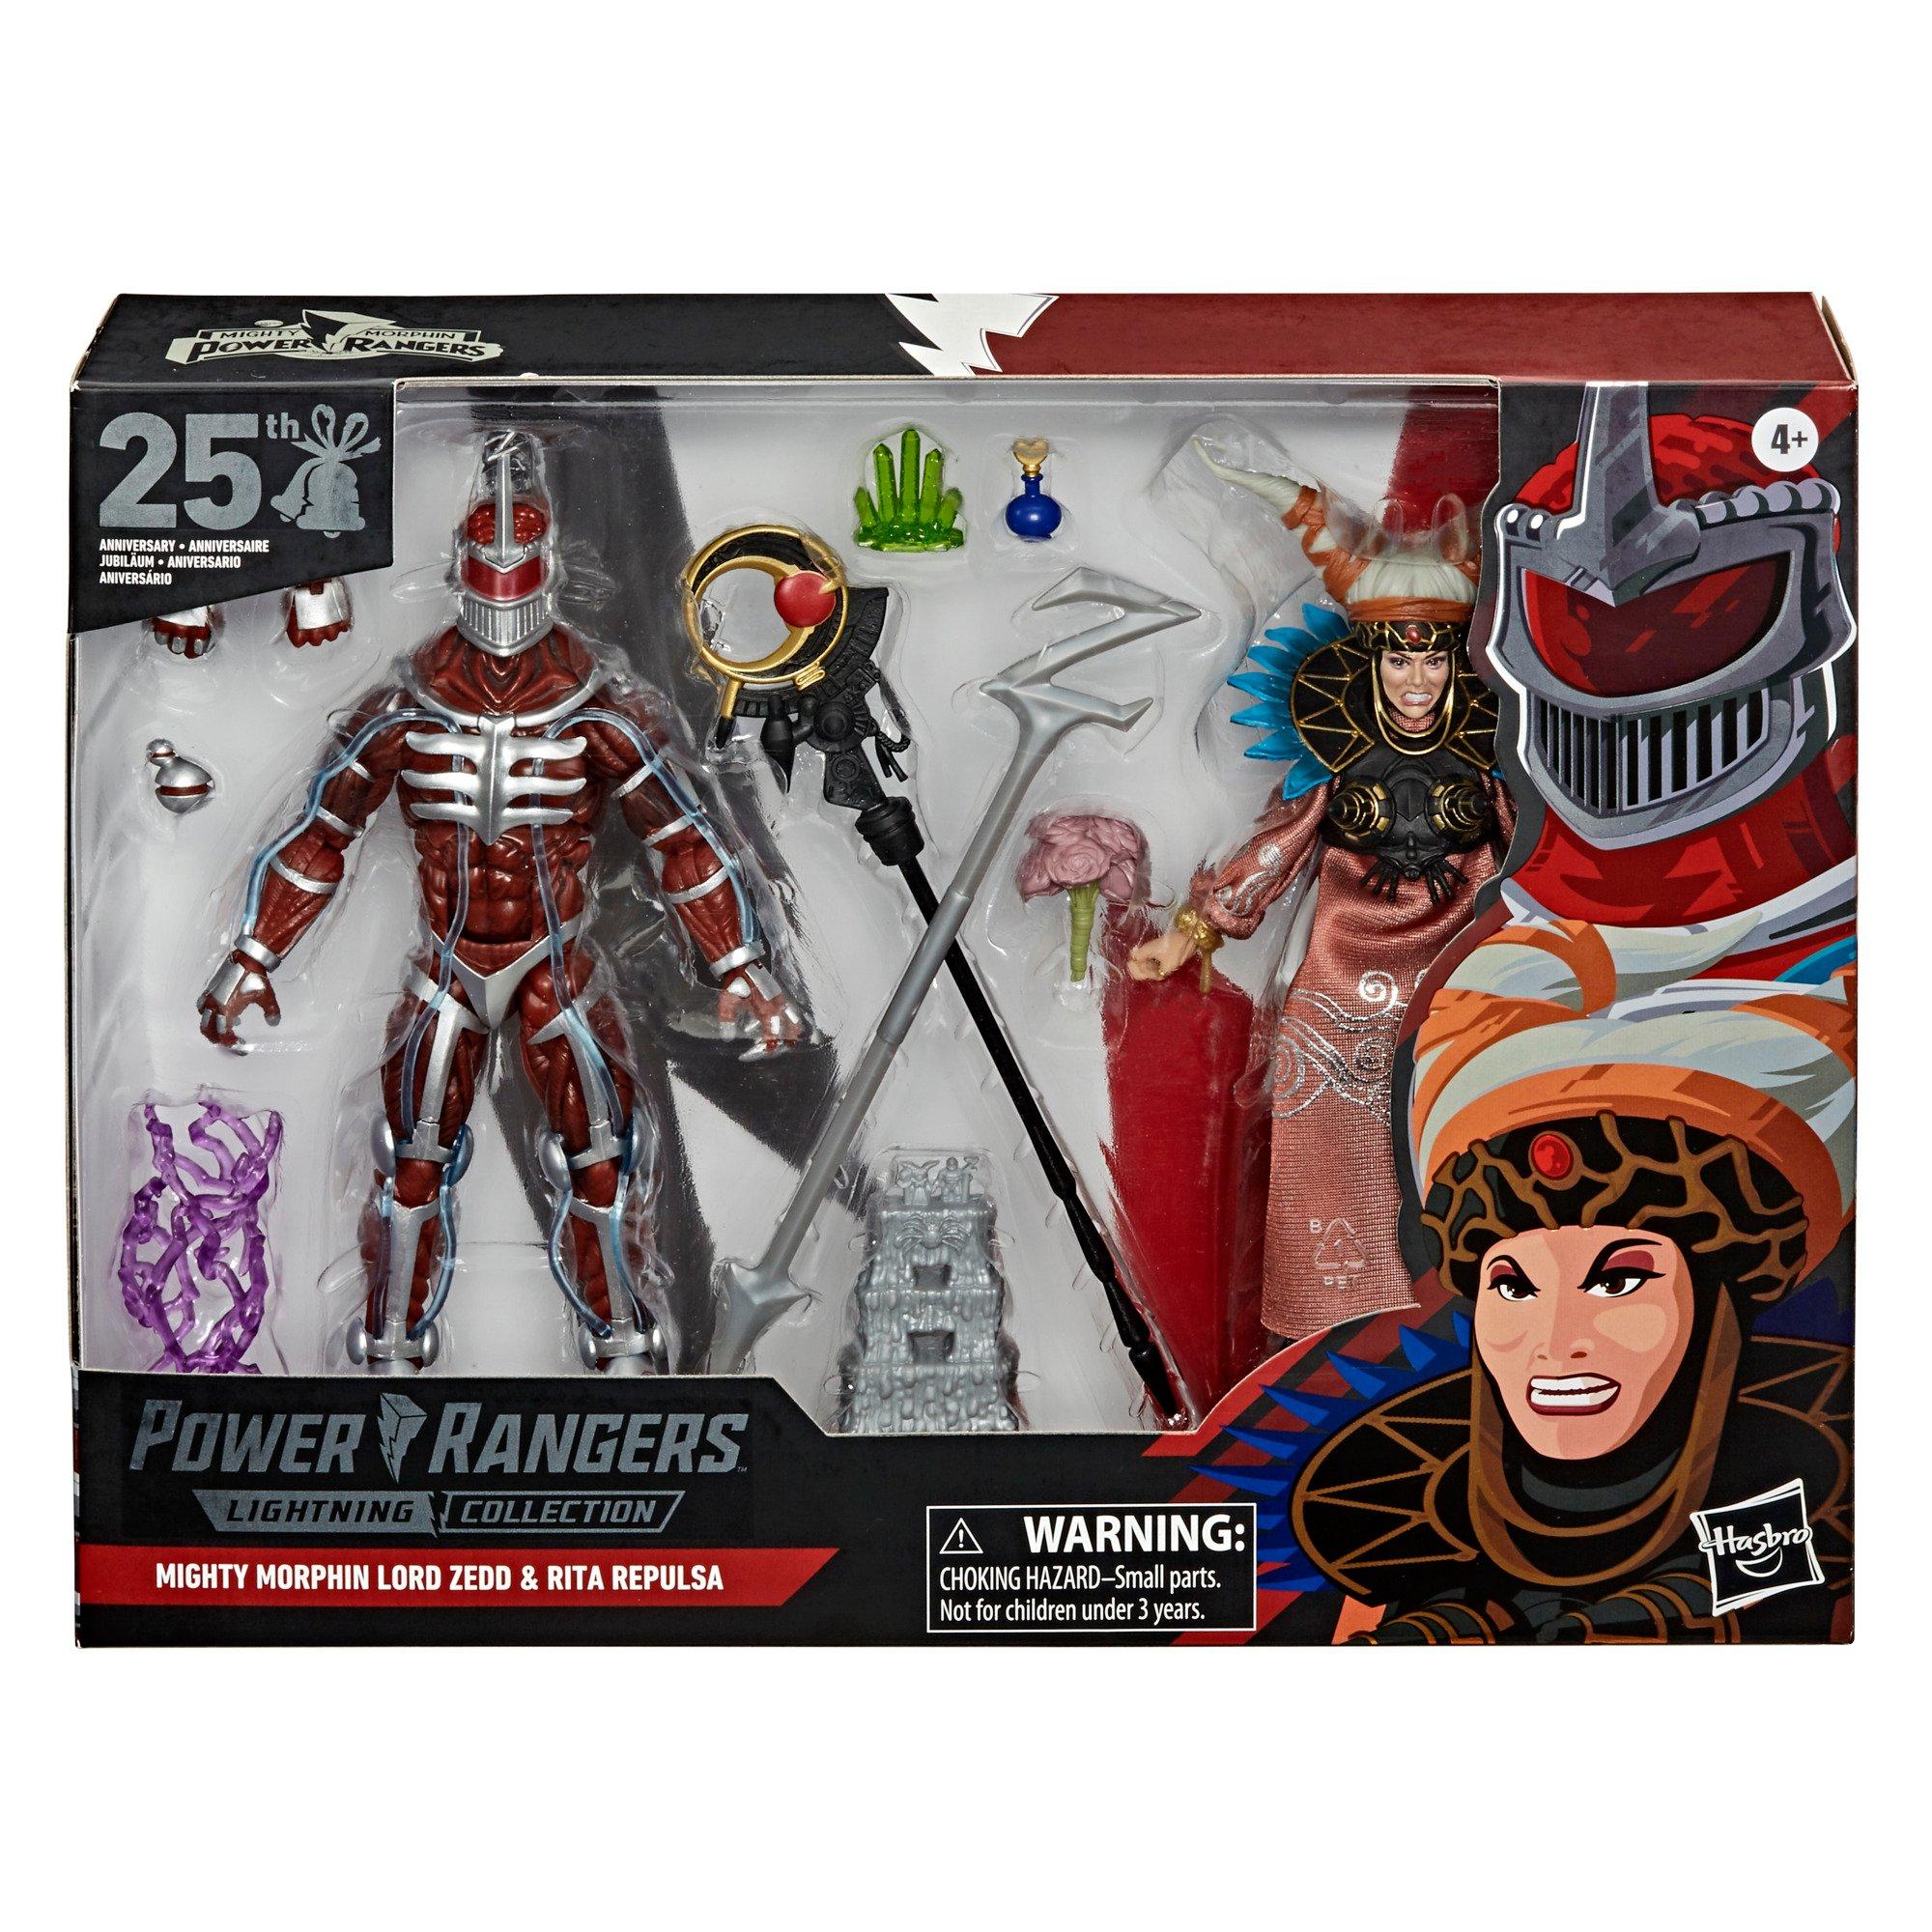 Power Rangers Lightning Collection Mighty Morphin Lord Zedd Hasbro 